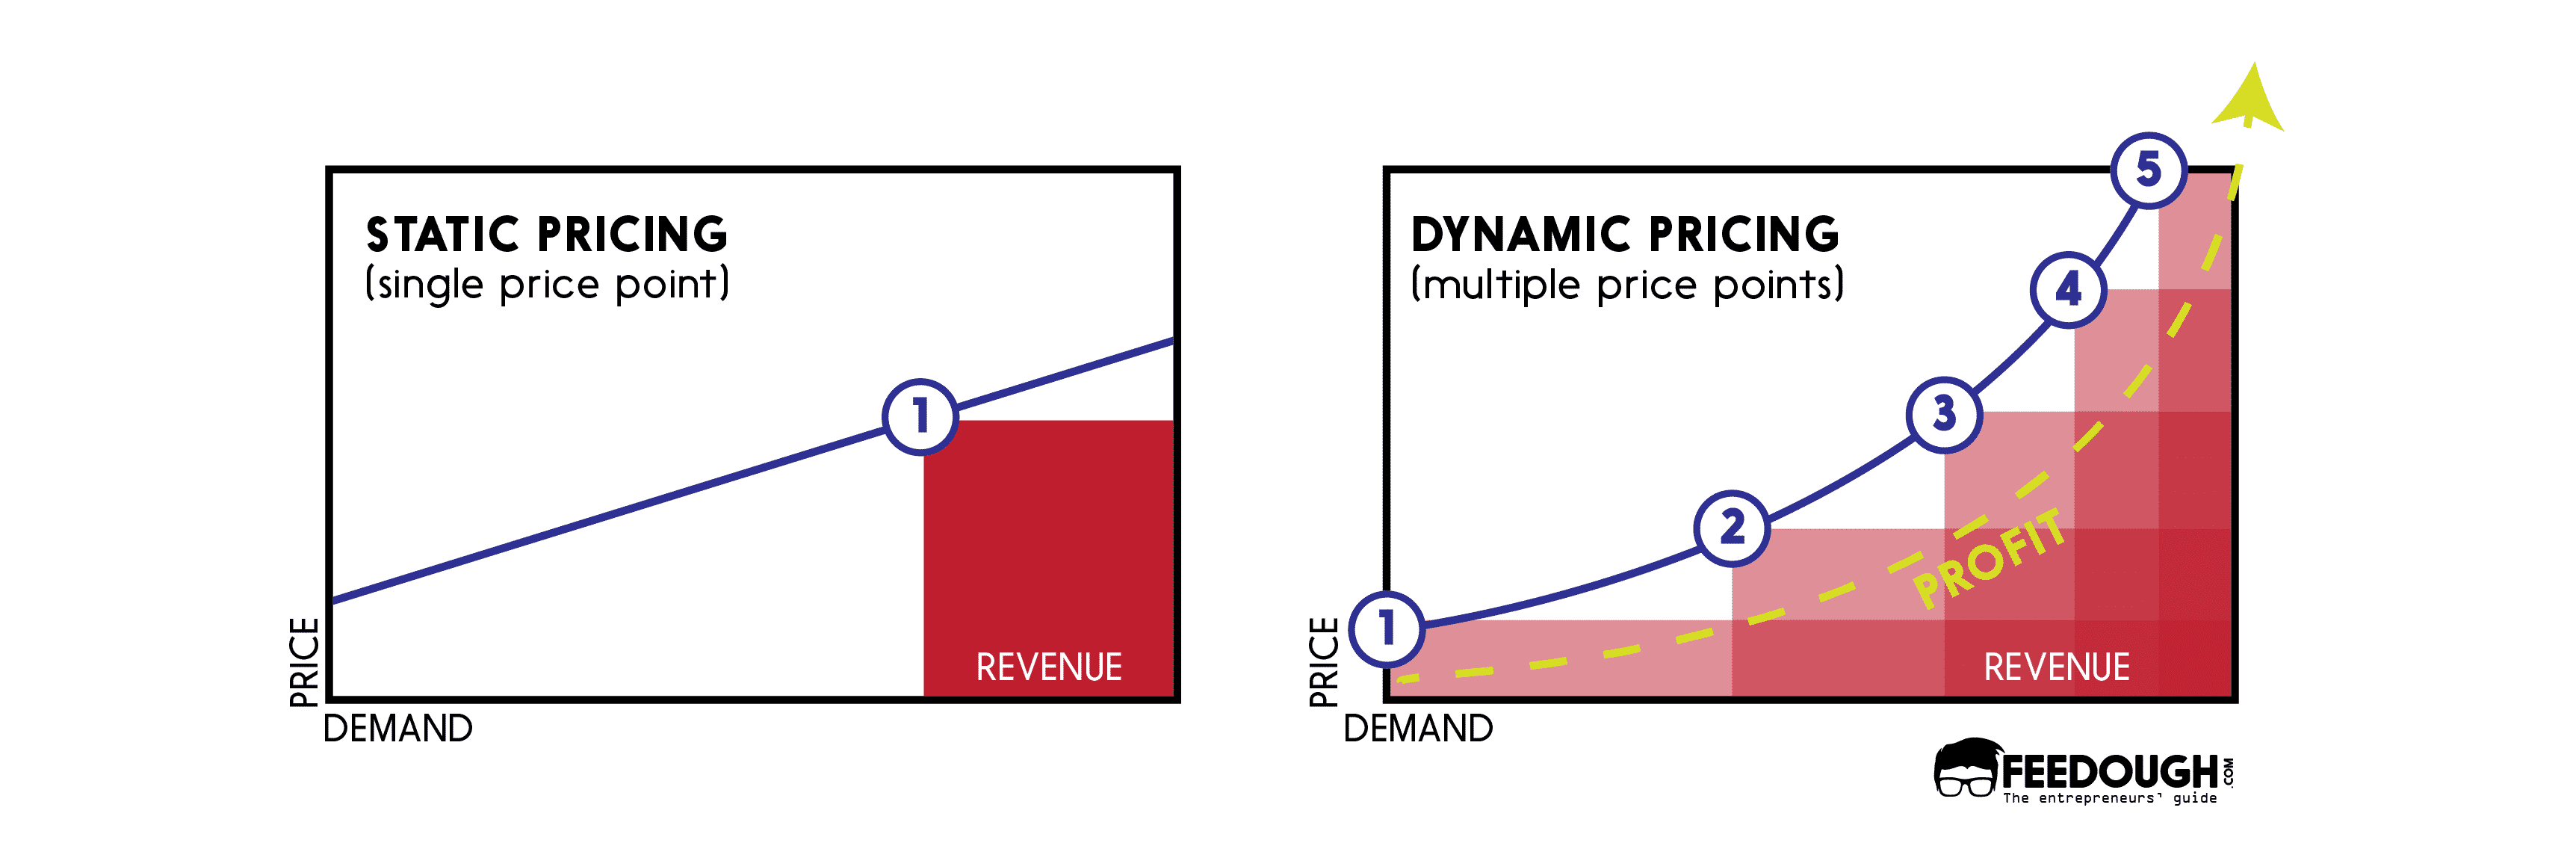 dynamic pricing